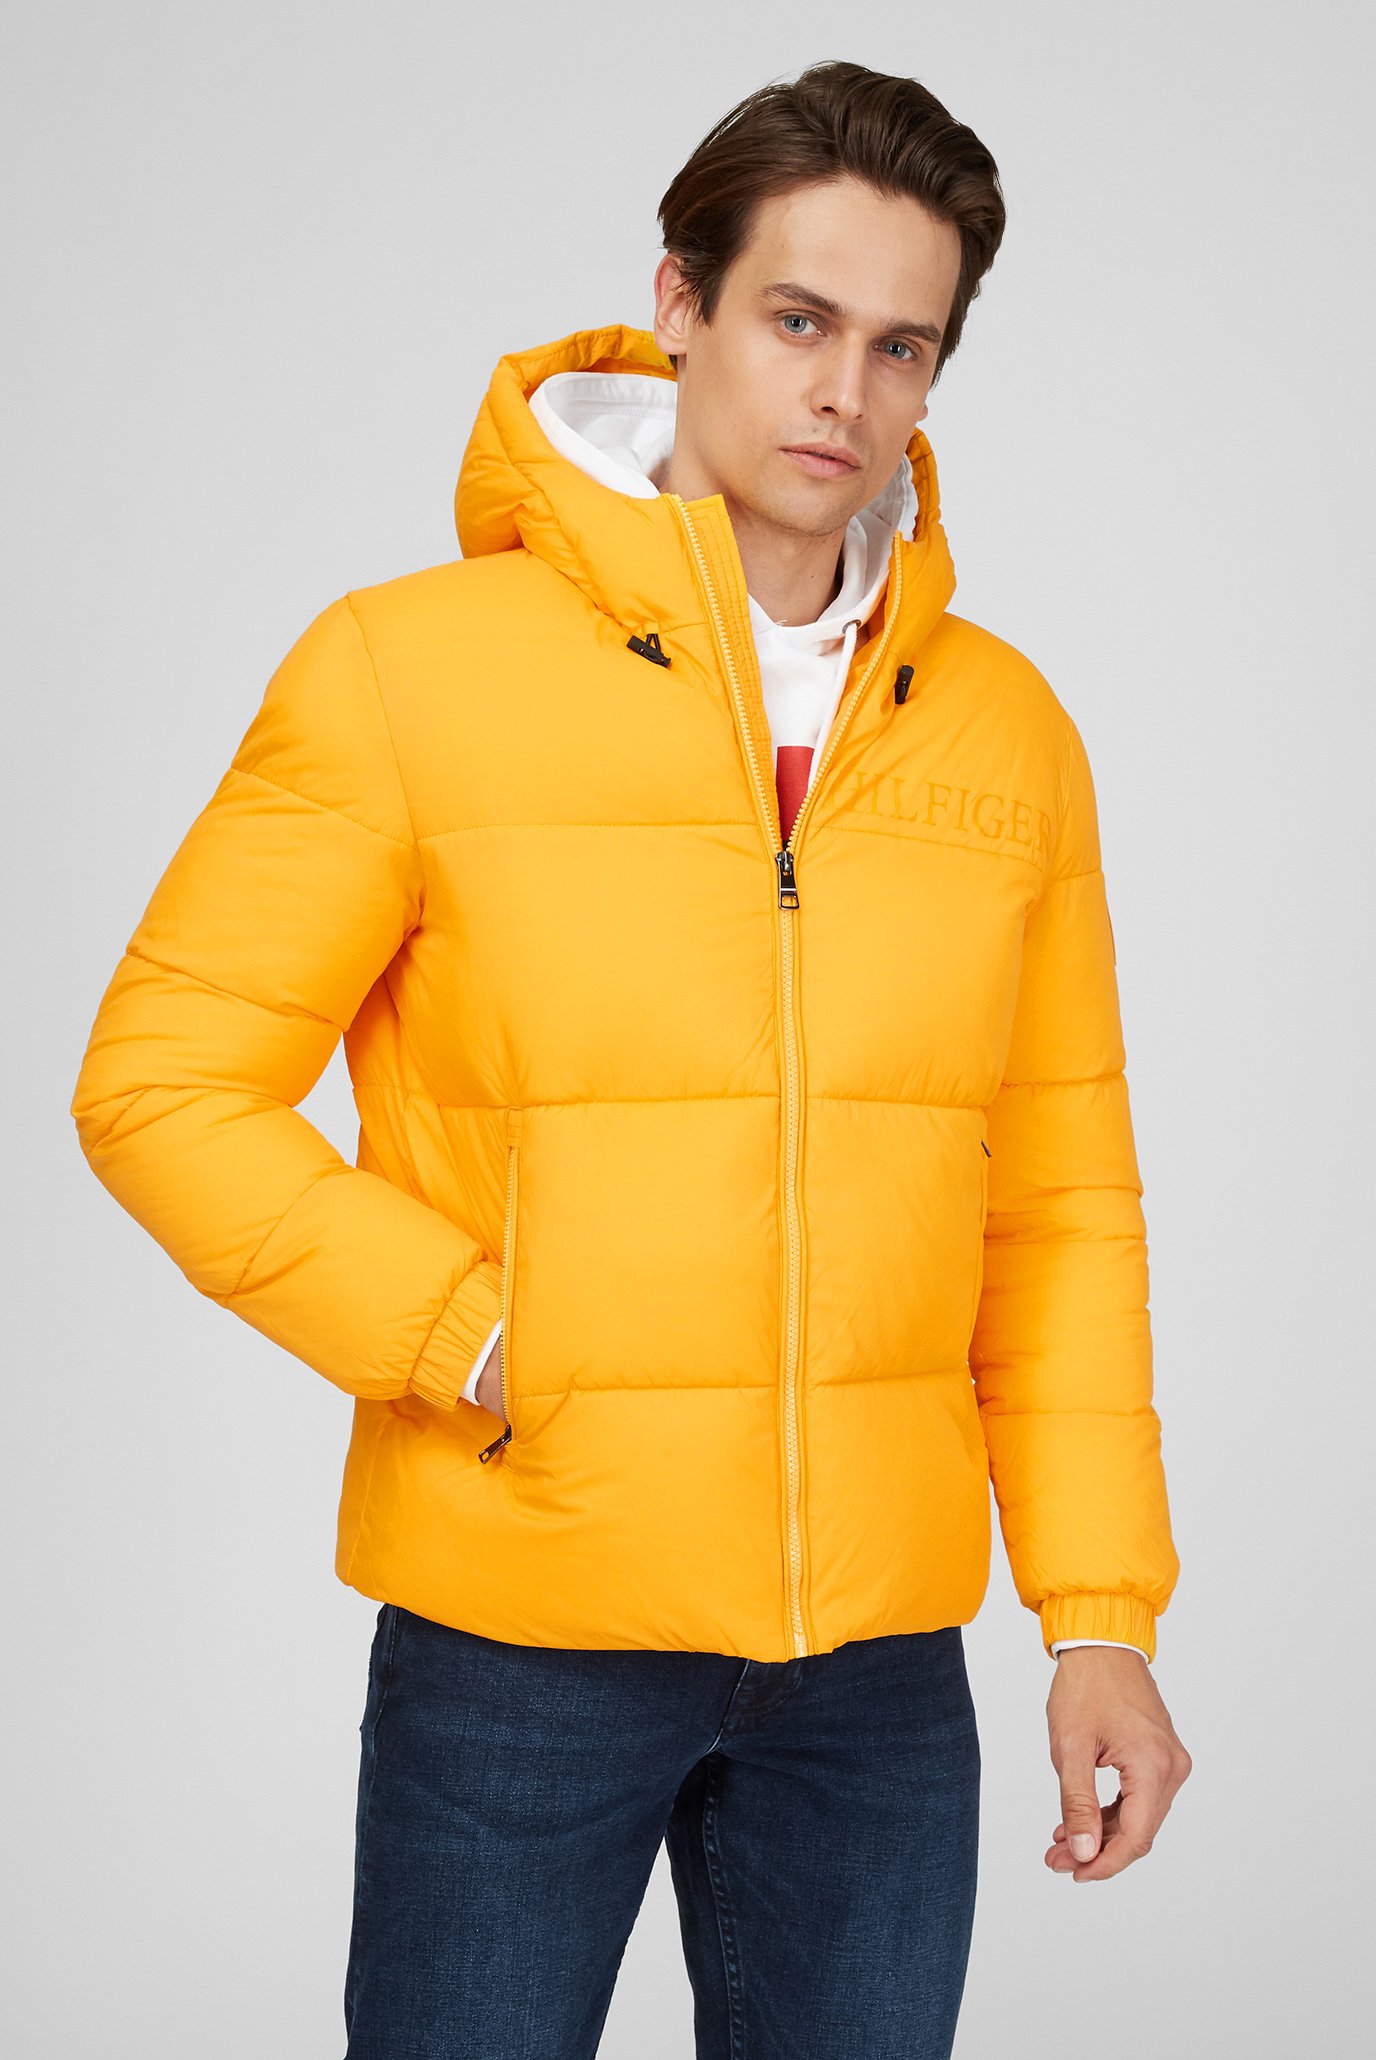 фото мужских курток желтого цвета